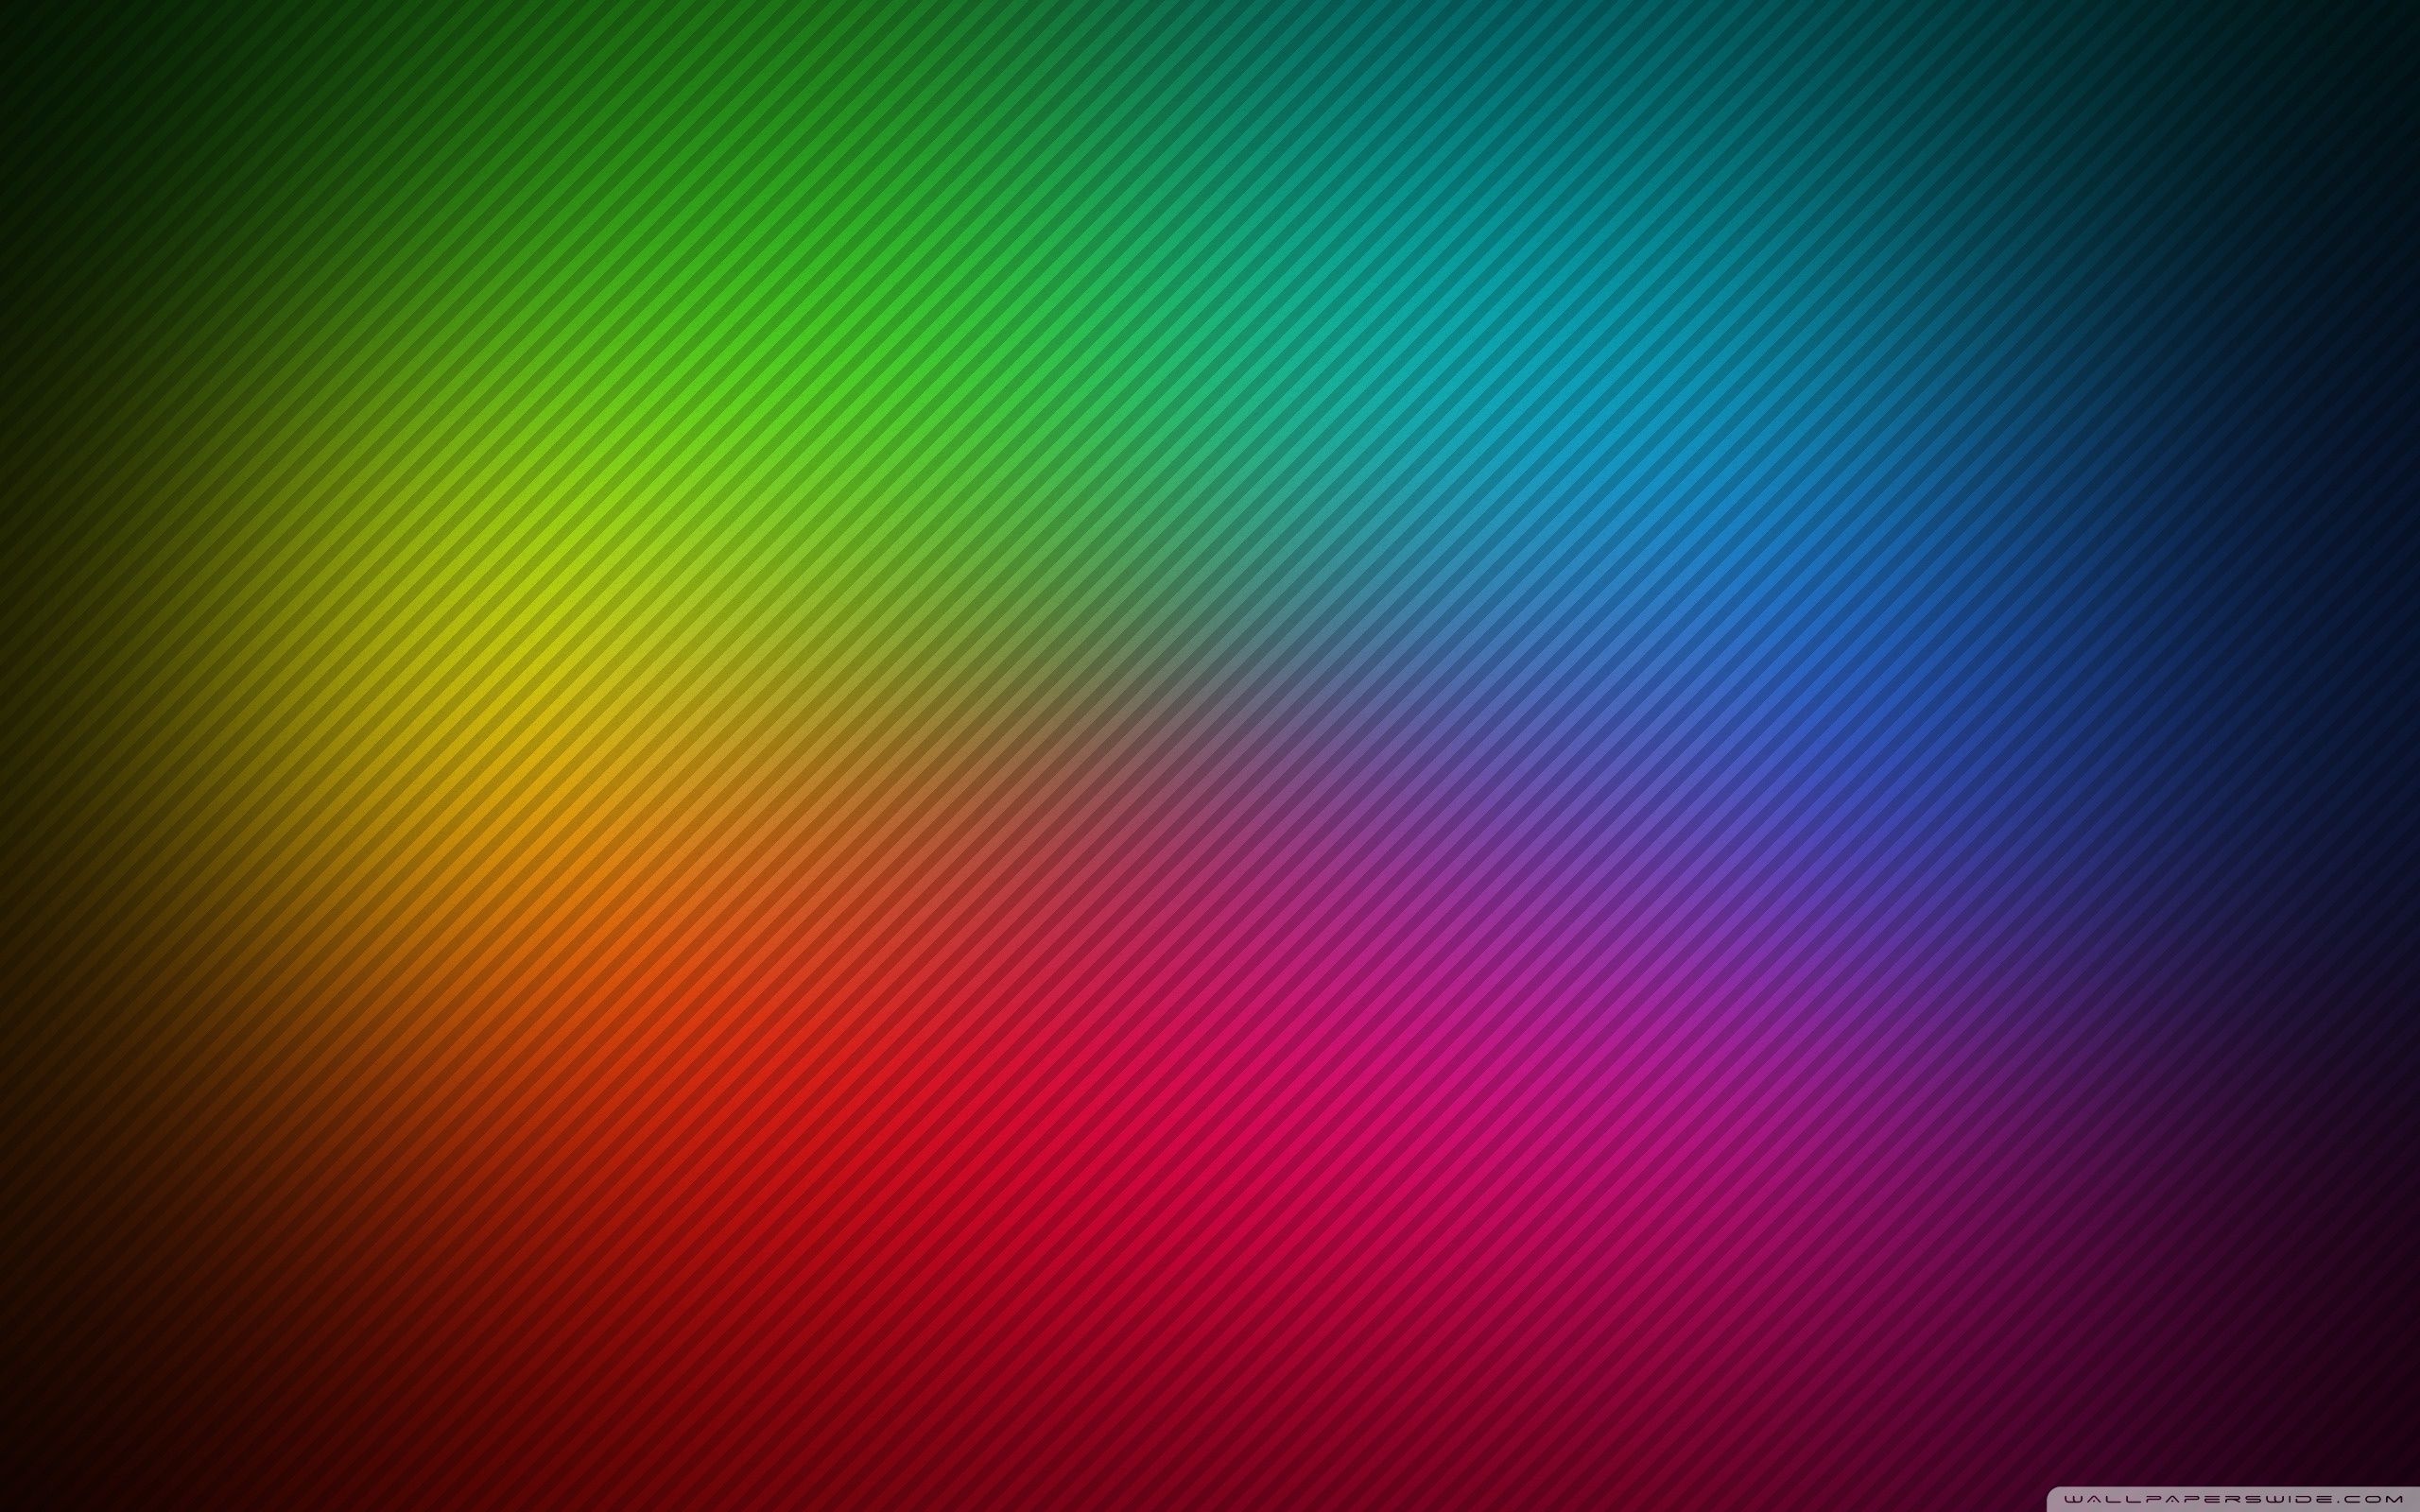 RGB Spectrum Ultra HD Desktop Background Wallpaper for 4K UHD TV, Tablet